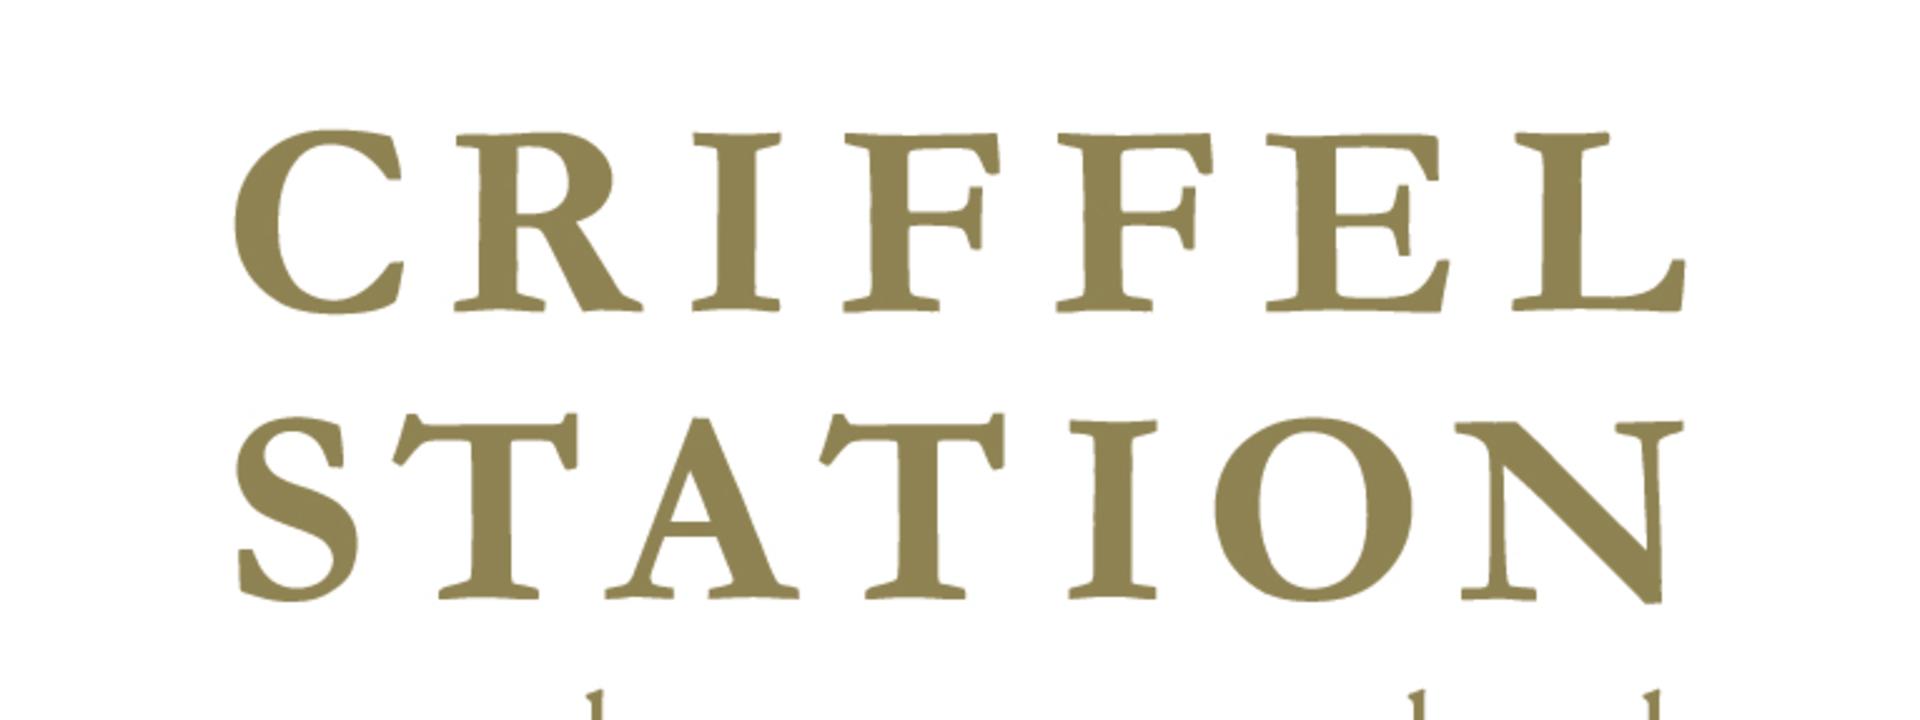 criffel-station_2018_logo_vertical_final-01.jpg